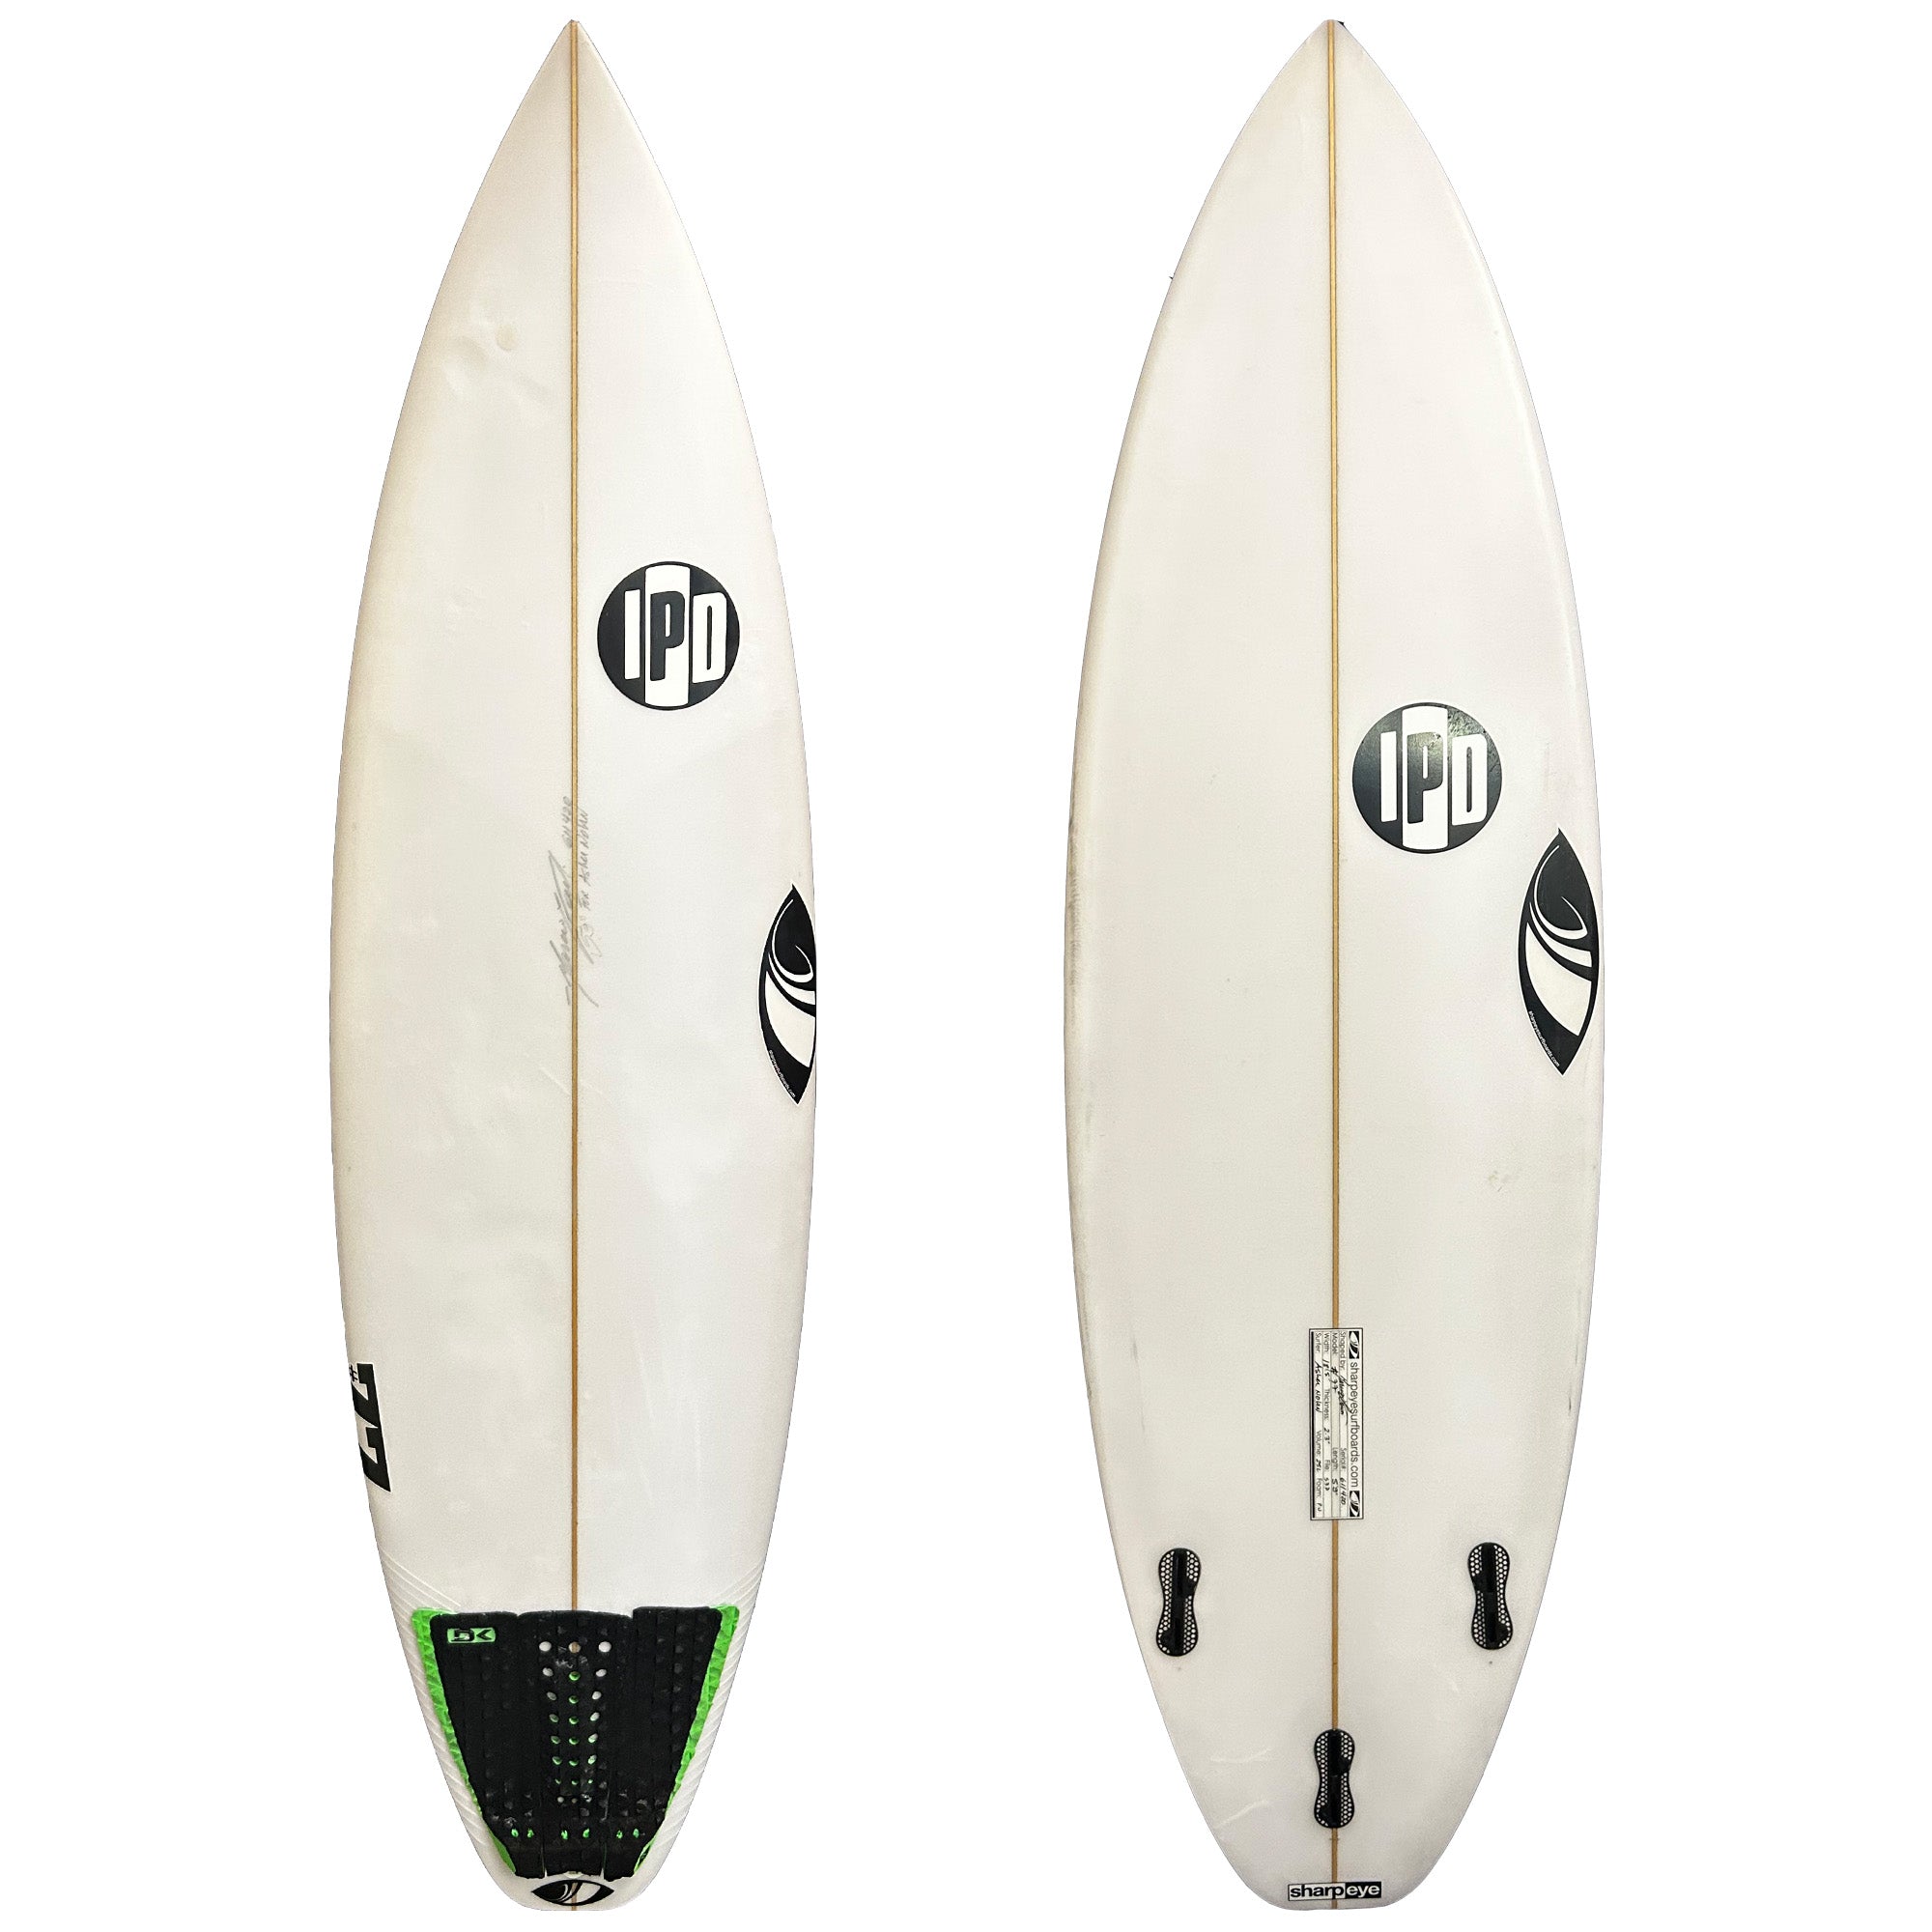 Sharp Eye #77 5'9 Consignment Surfboard